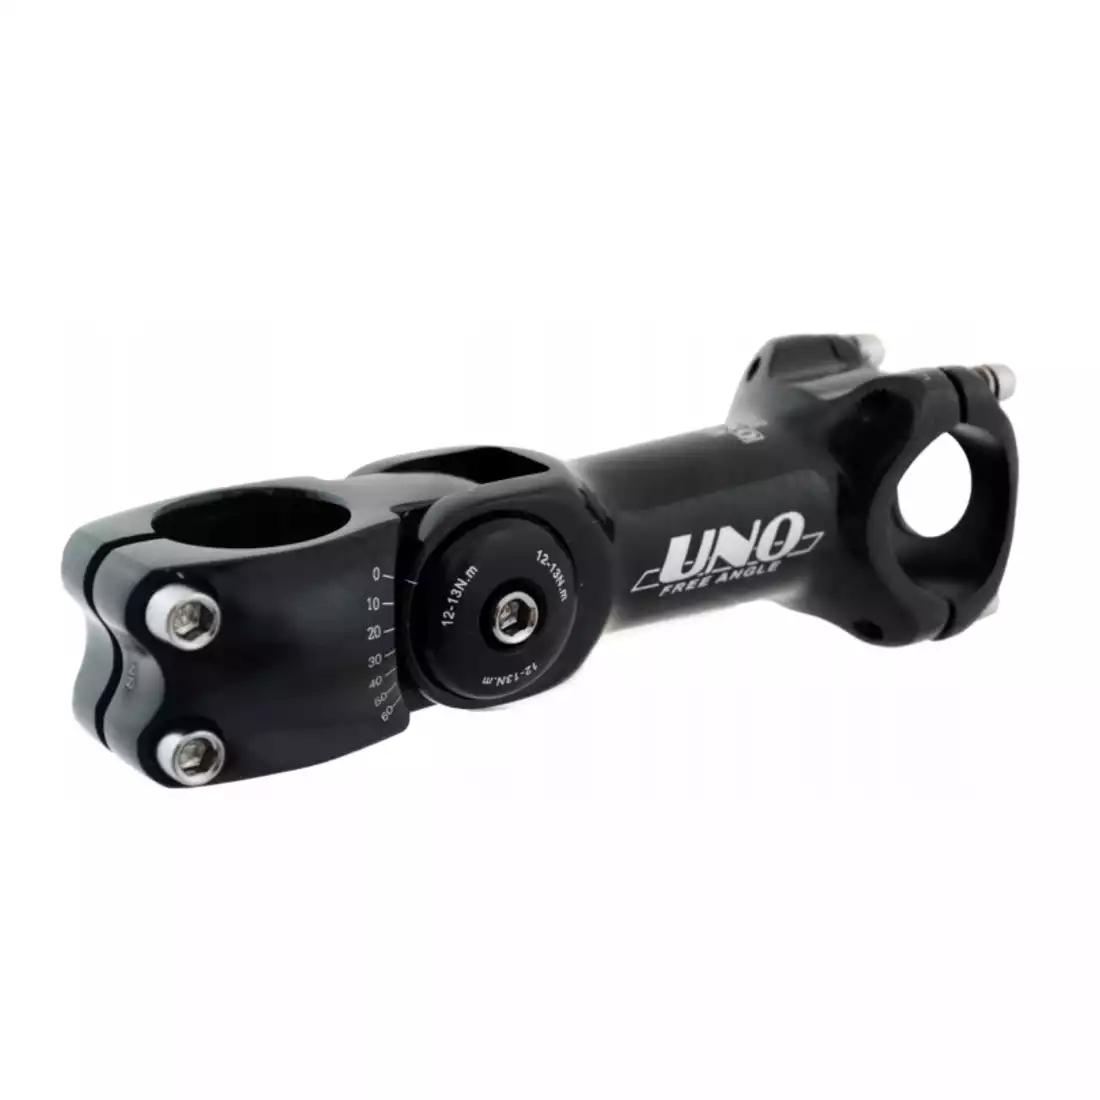 https://www.mikesport.eu/img/imagecache/47001-48000/product-media/UNO-bicycle-handlebar-bracket-31-8x125-mm-verstellbar-schwarz-110984-1100x1100.webp